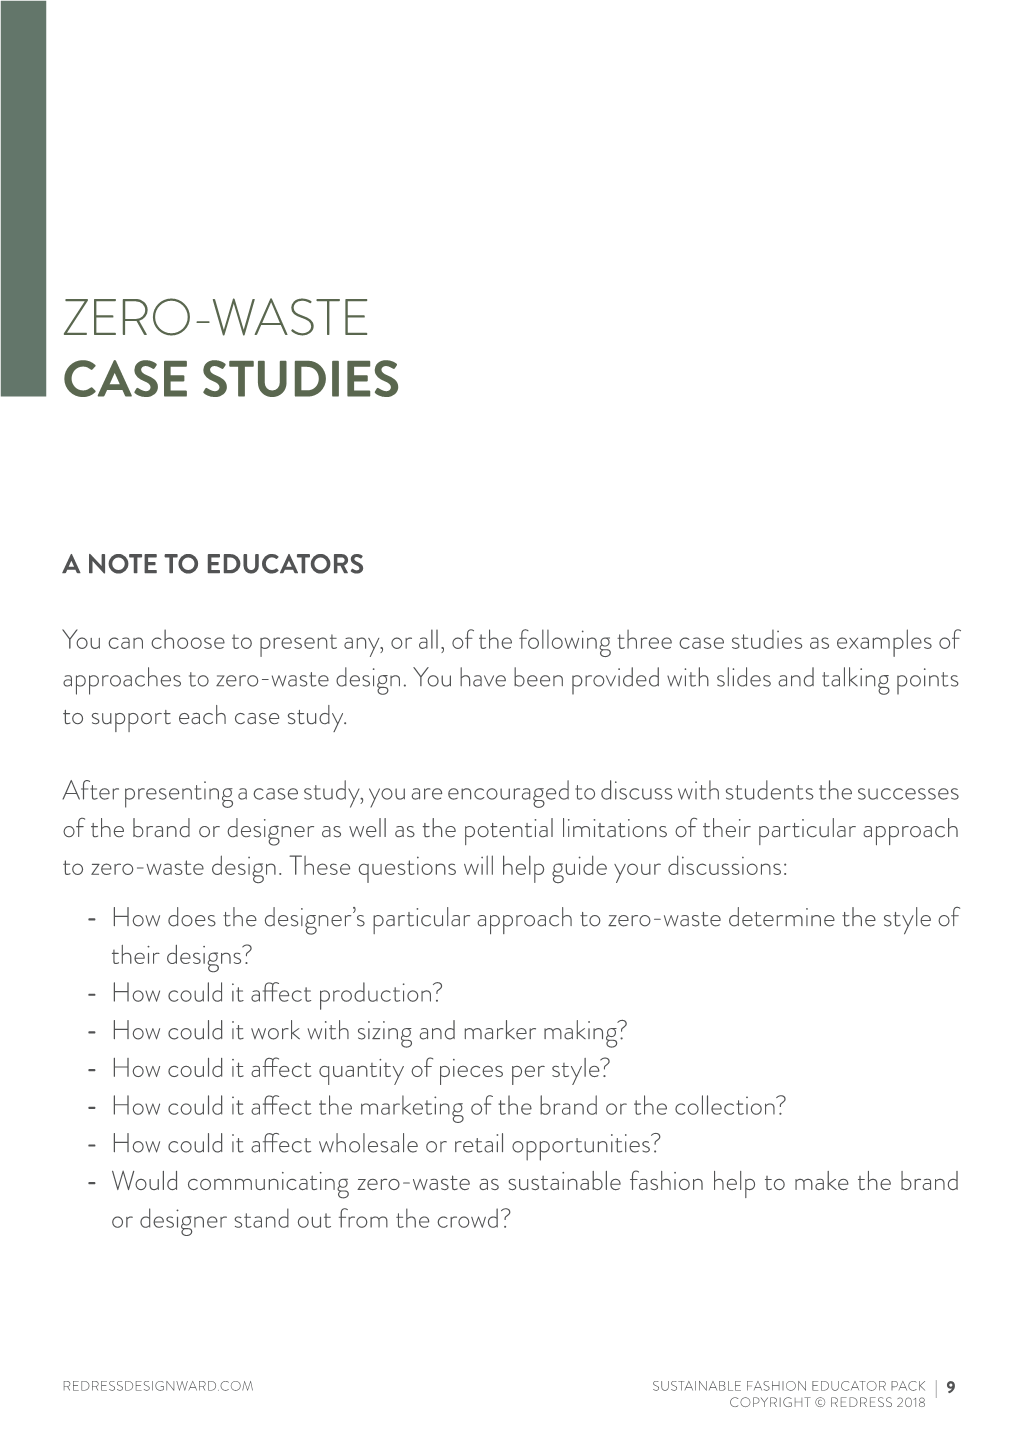 Zero-Waste Case Studies